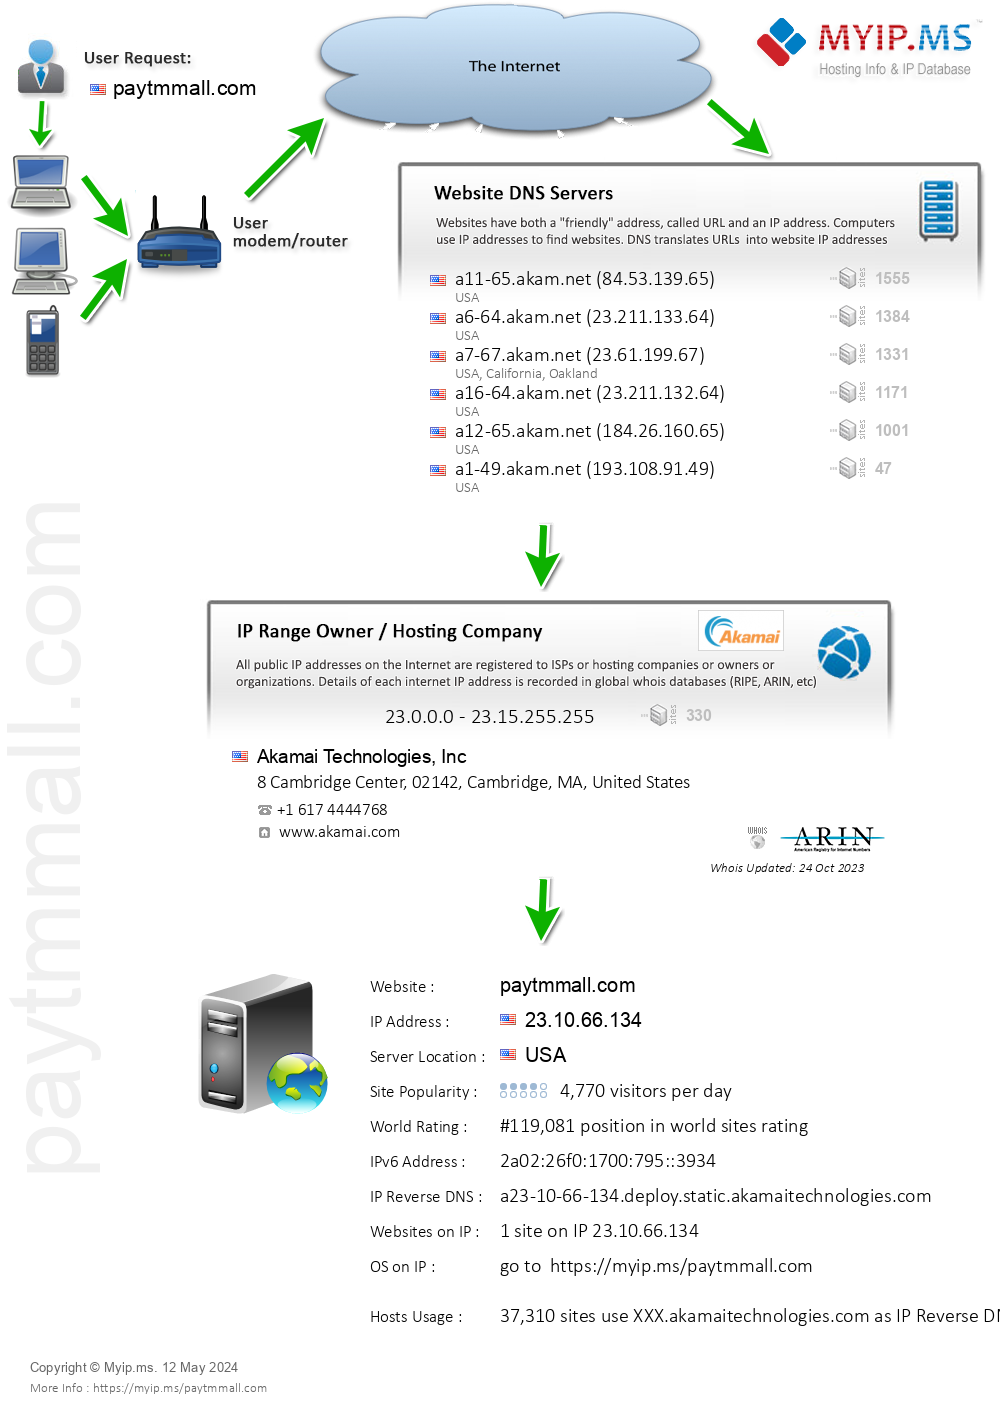 Paytmmall.com - Website Hosting Visual IP Diagram